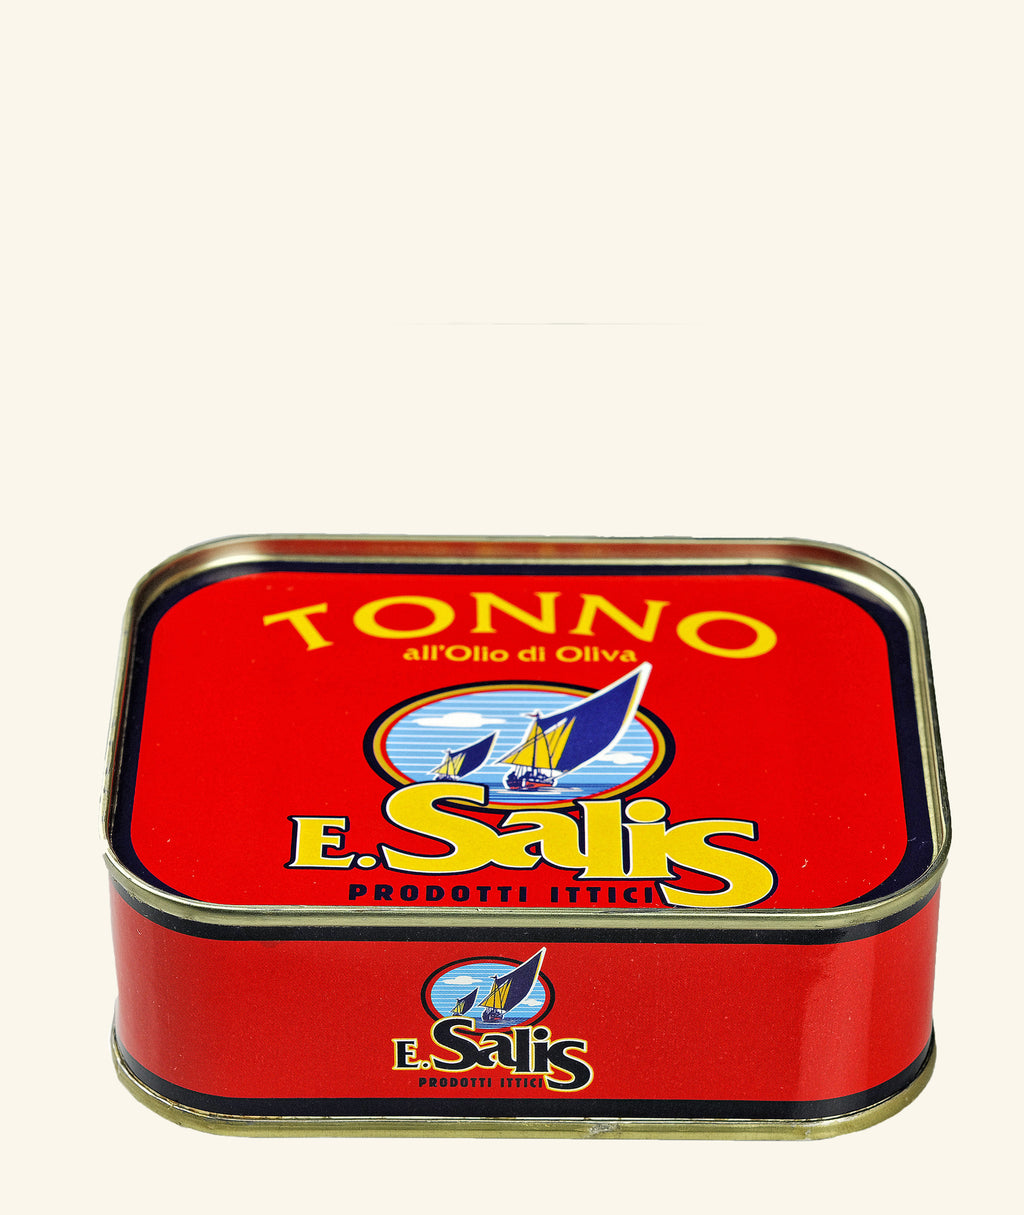 Tonno Rosso – Sardinian Red Tuna